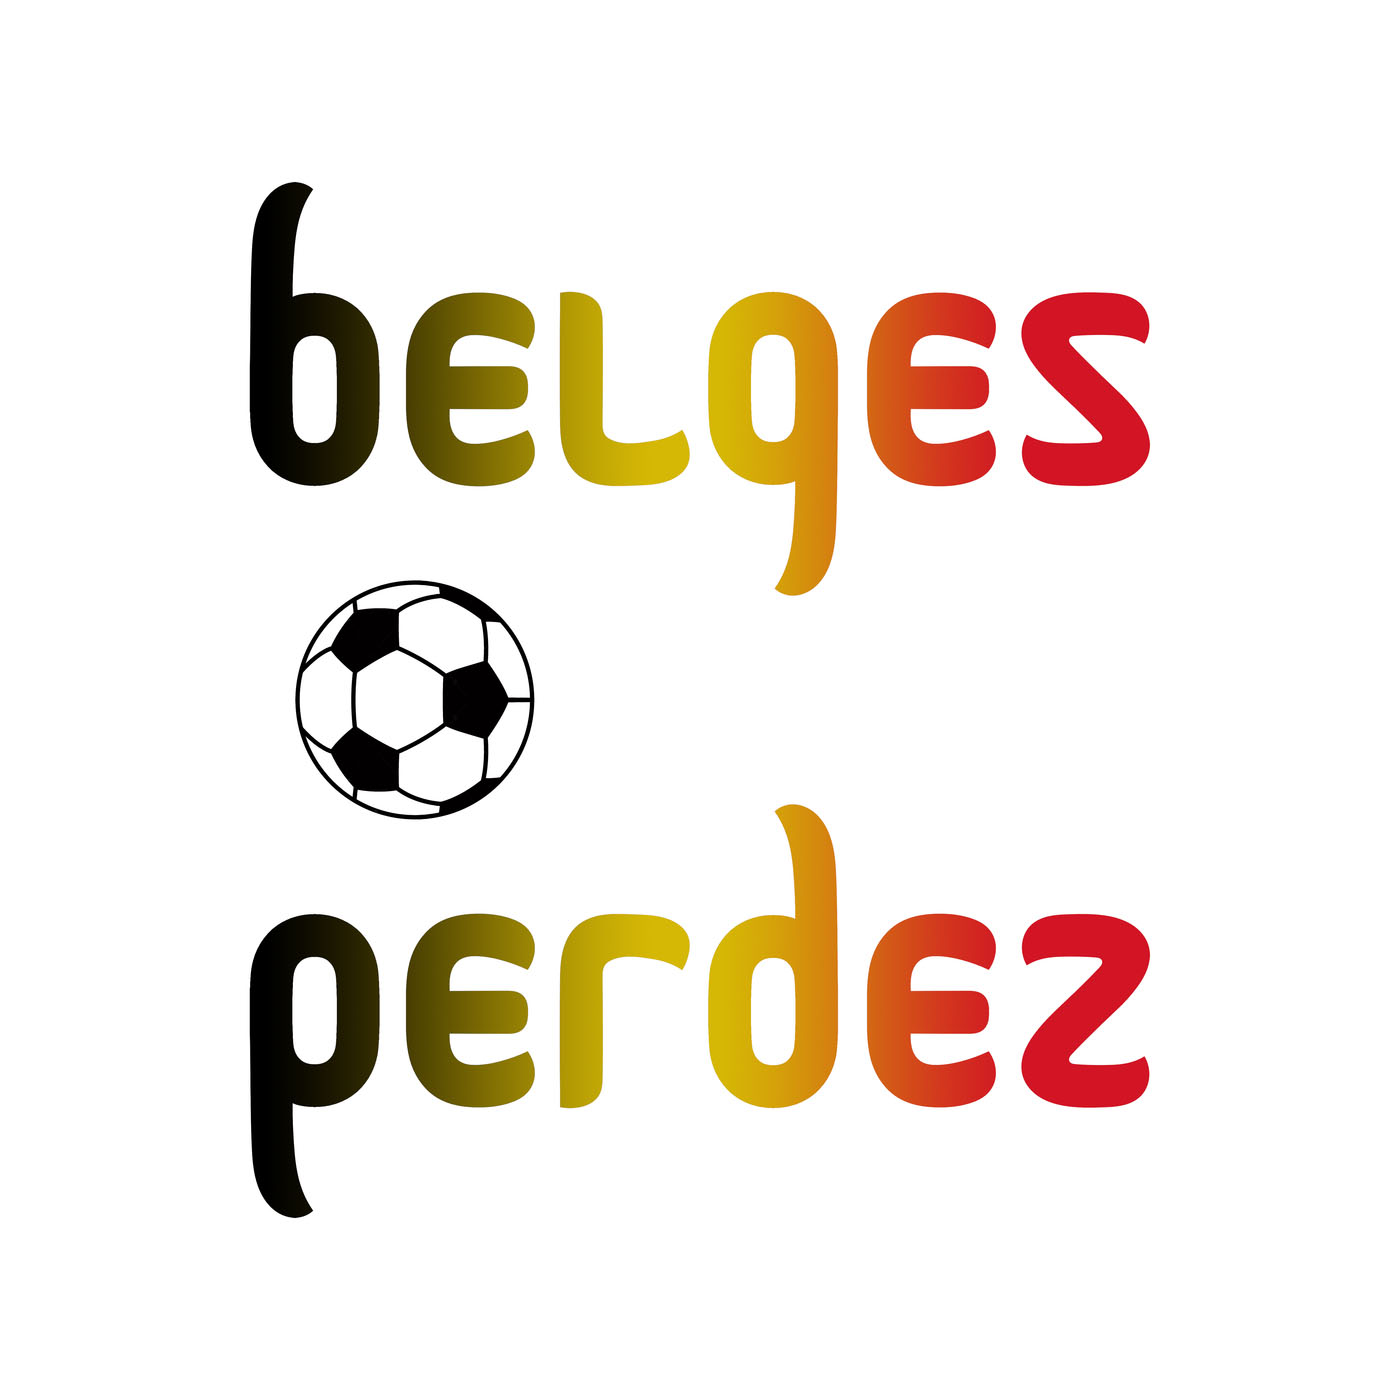 ambigramme belges perdez sport